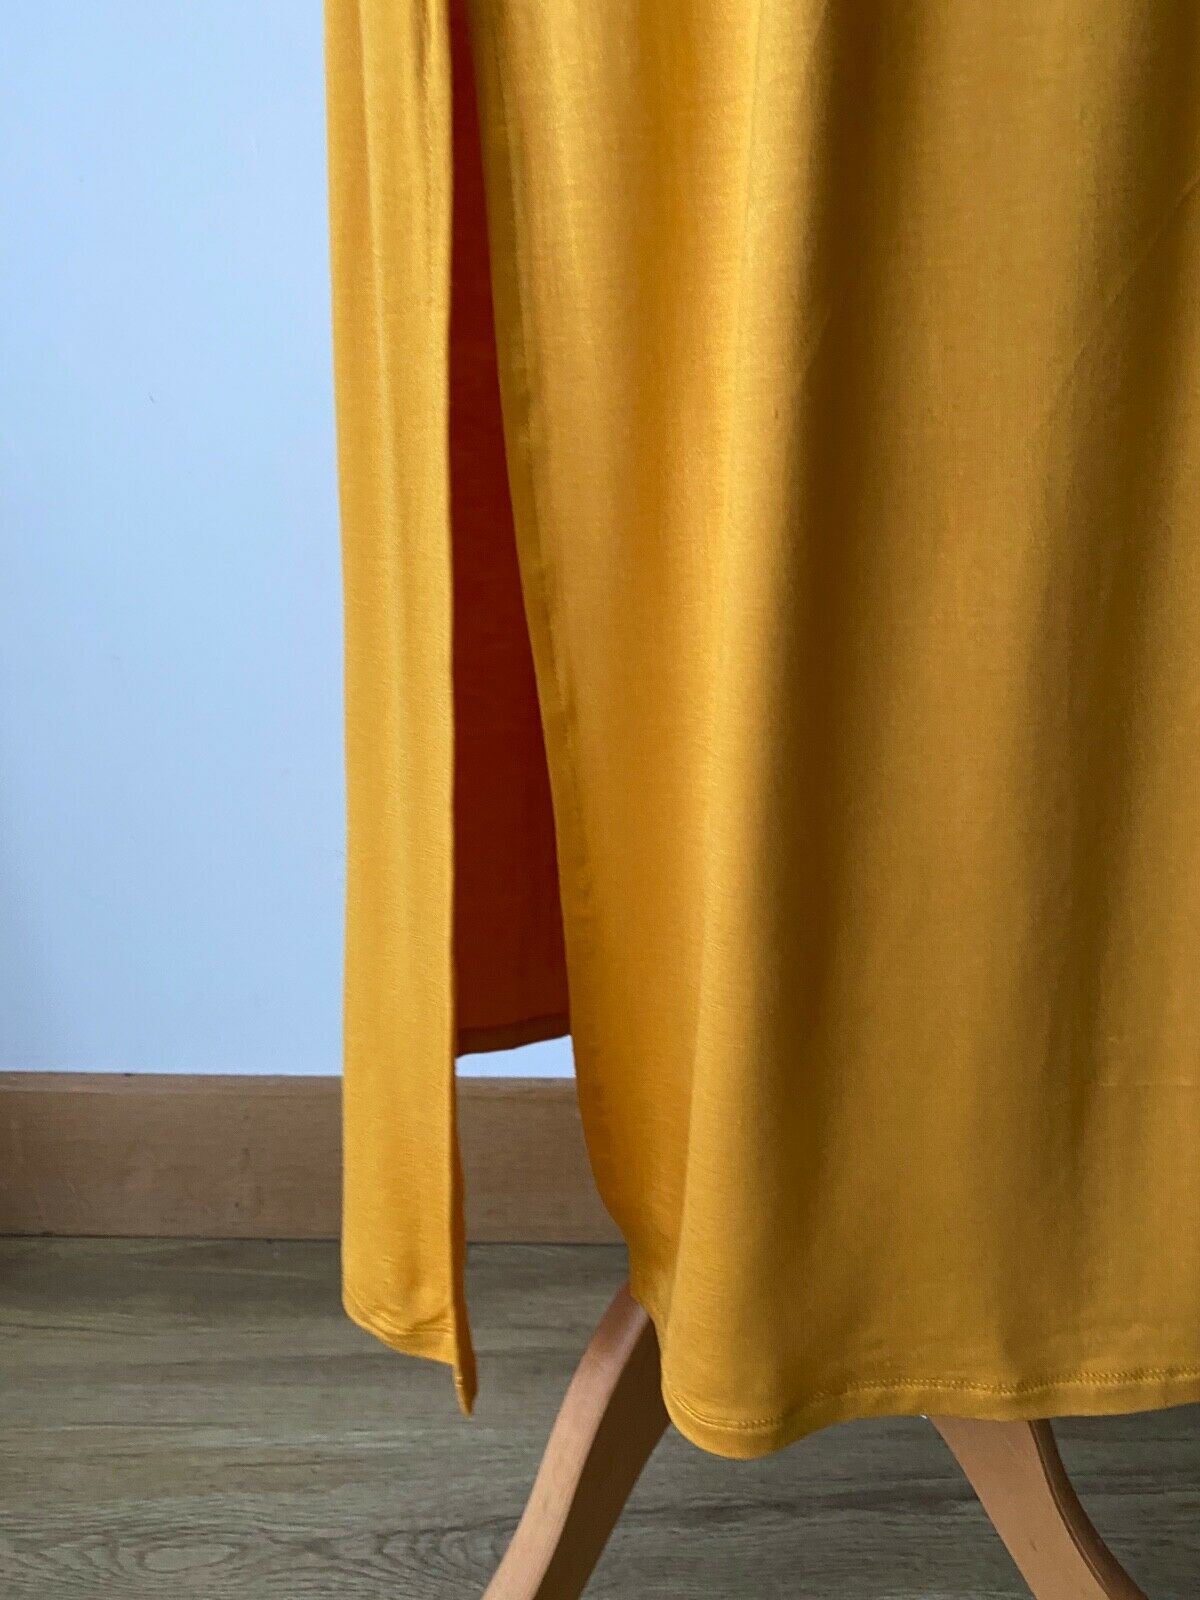 Very Mustard Yellow Strapless Maxi Dress Size 8